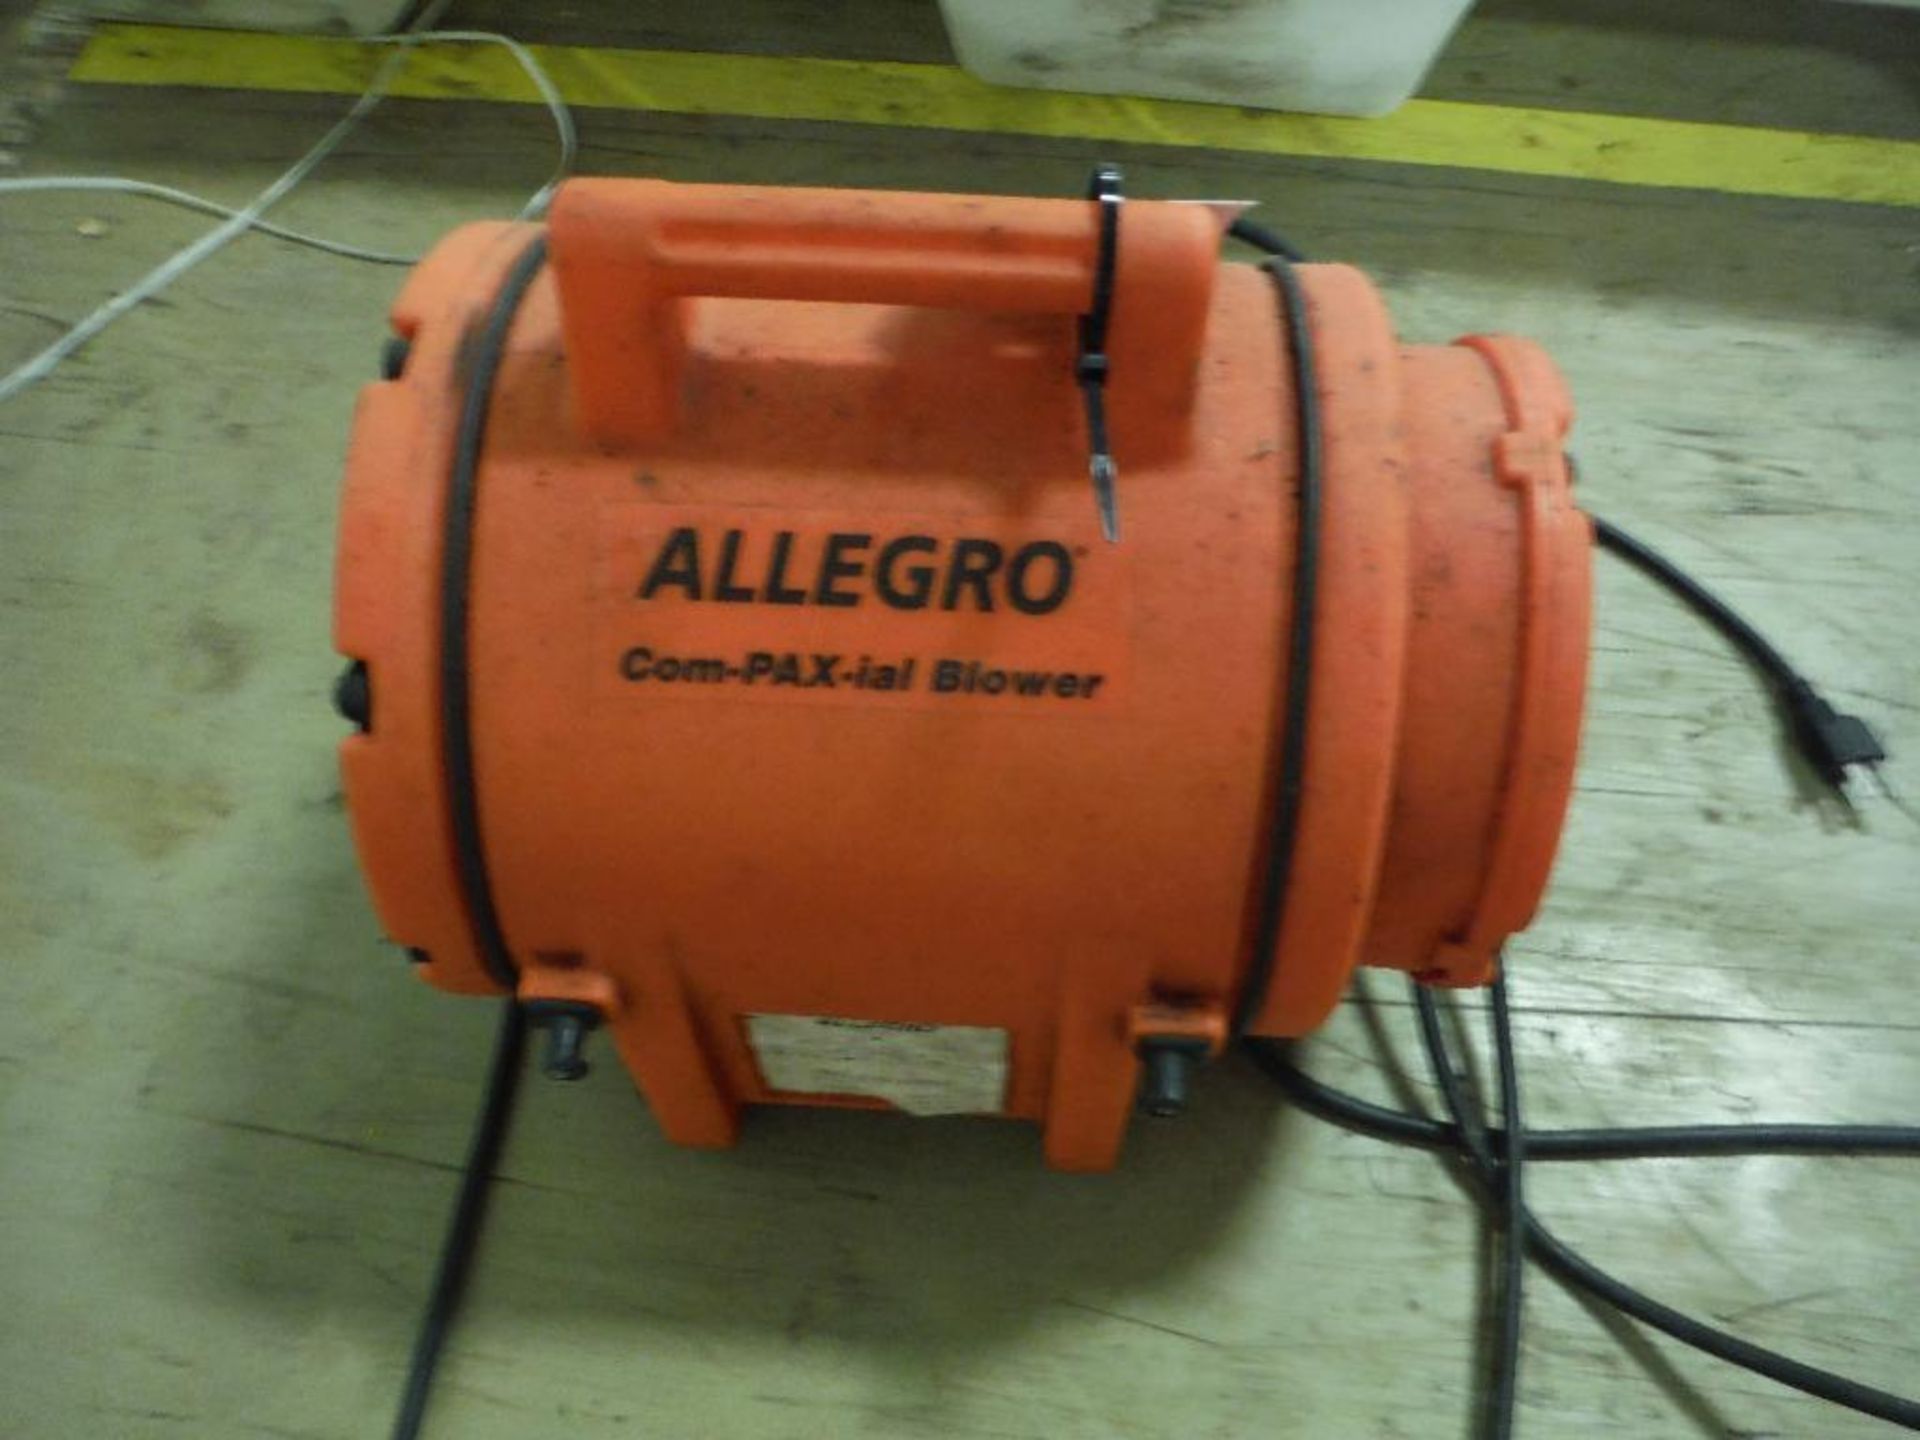 Allegro Com-PAX-ial Blower. Rigging Fee: $25 - Image 2 of 3